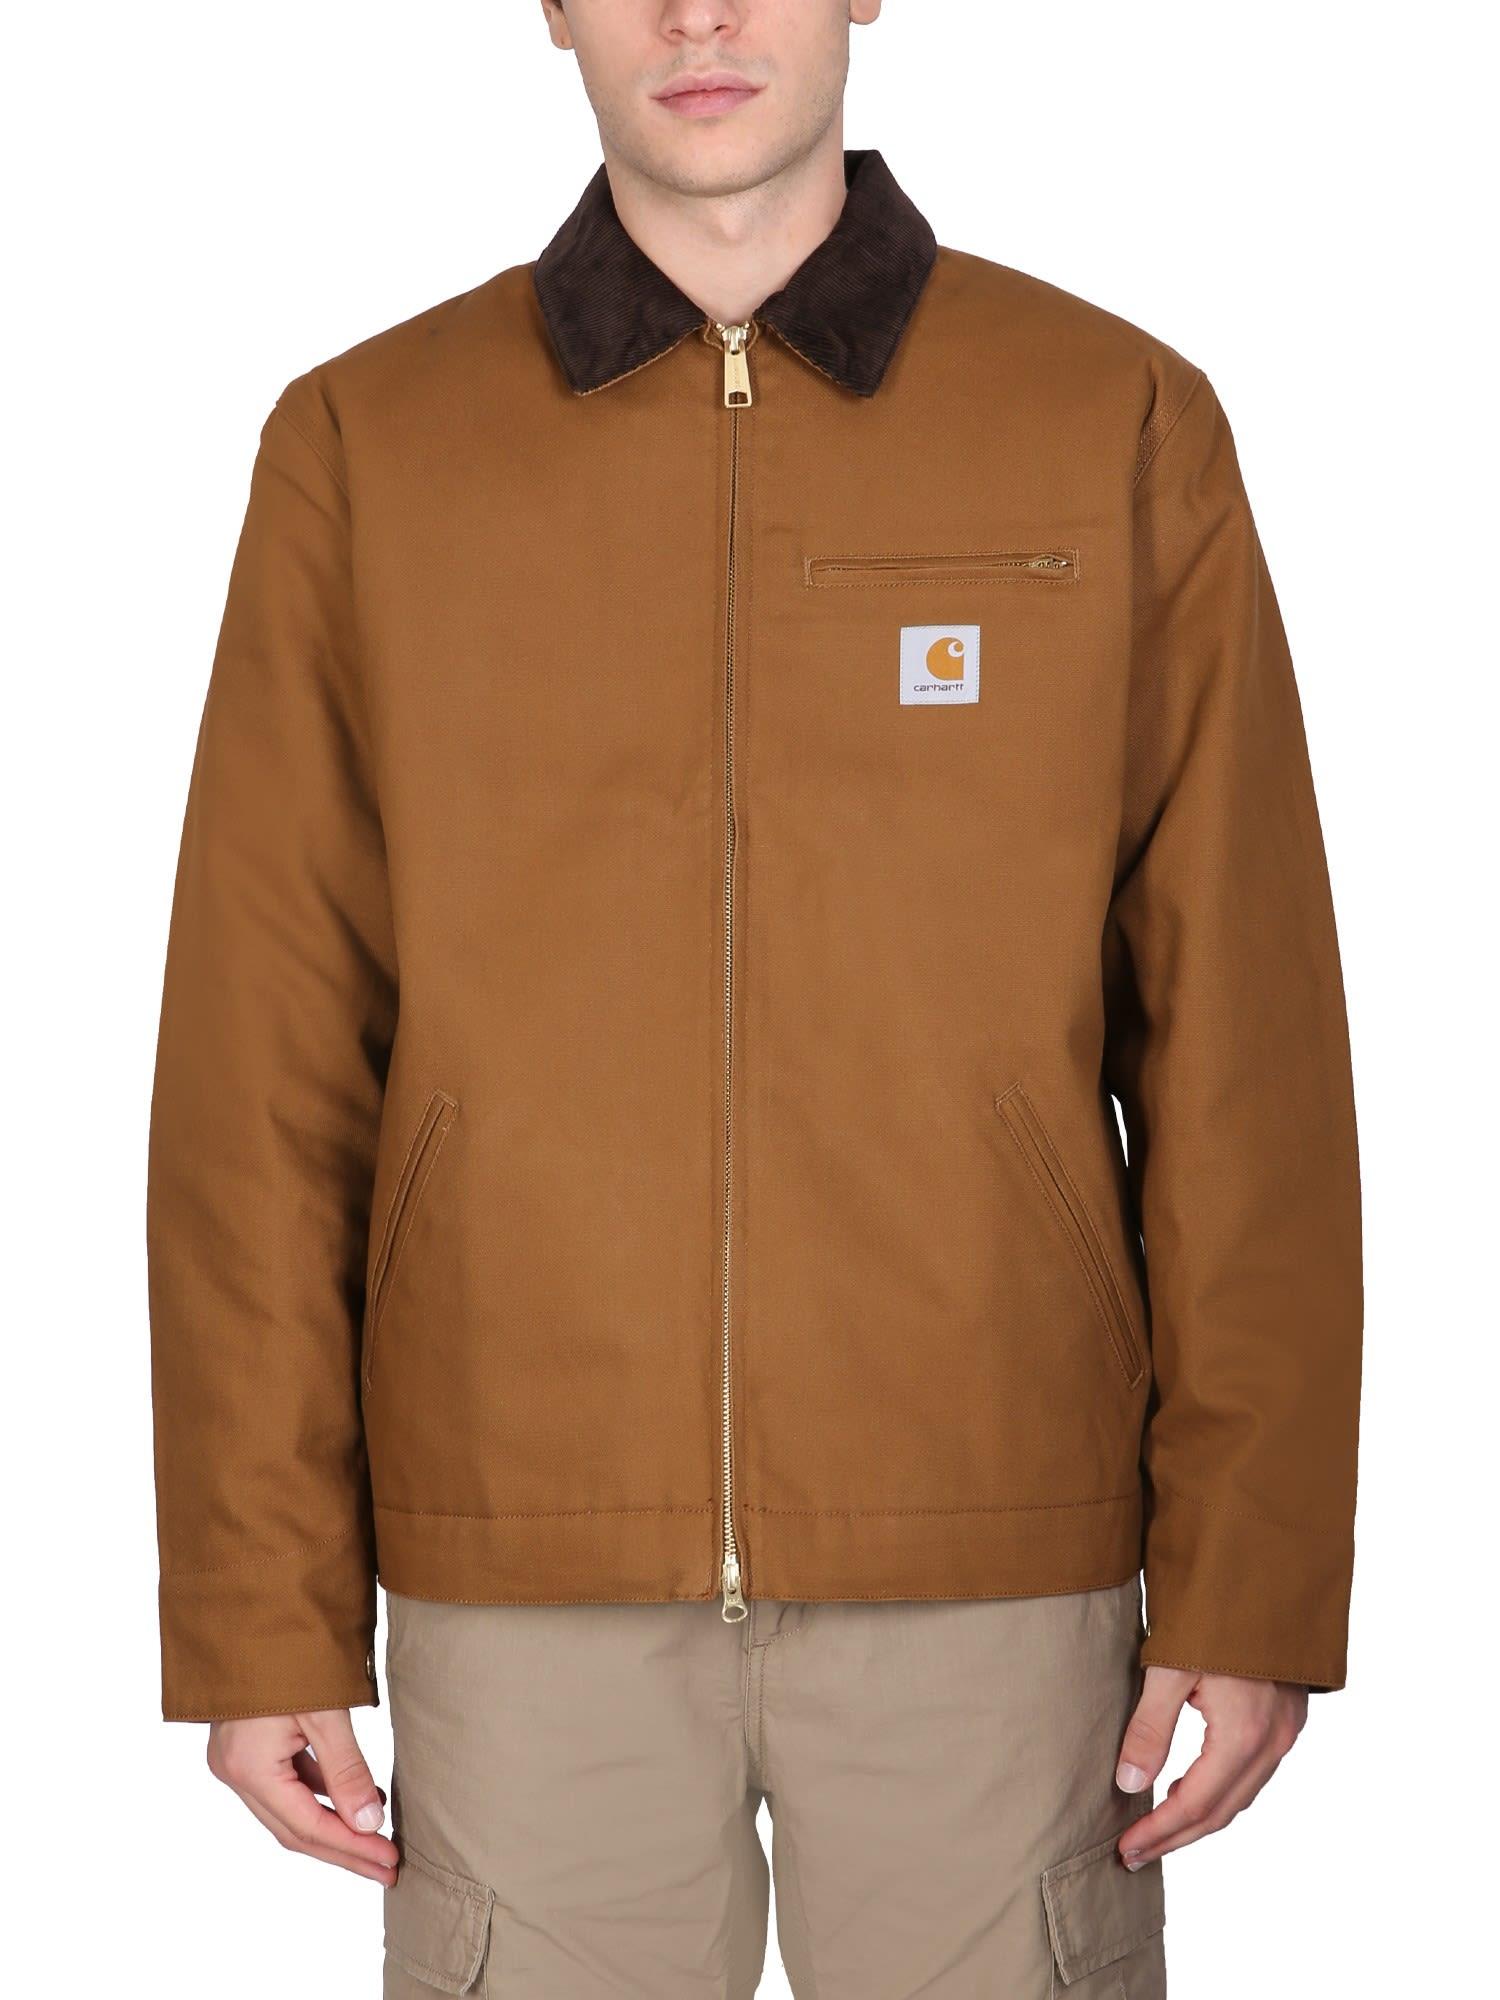 Carhartt WIP Cotton Detroit Jacket in Beige (Natural) for Men - Save 18% |  Lyst